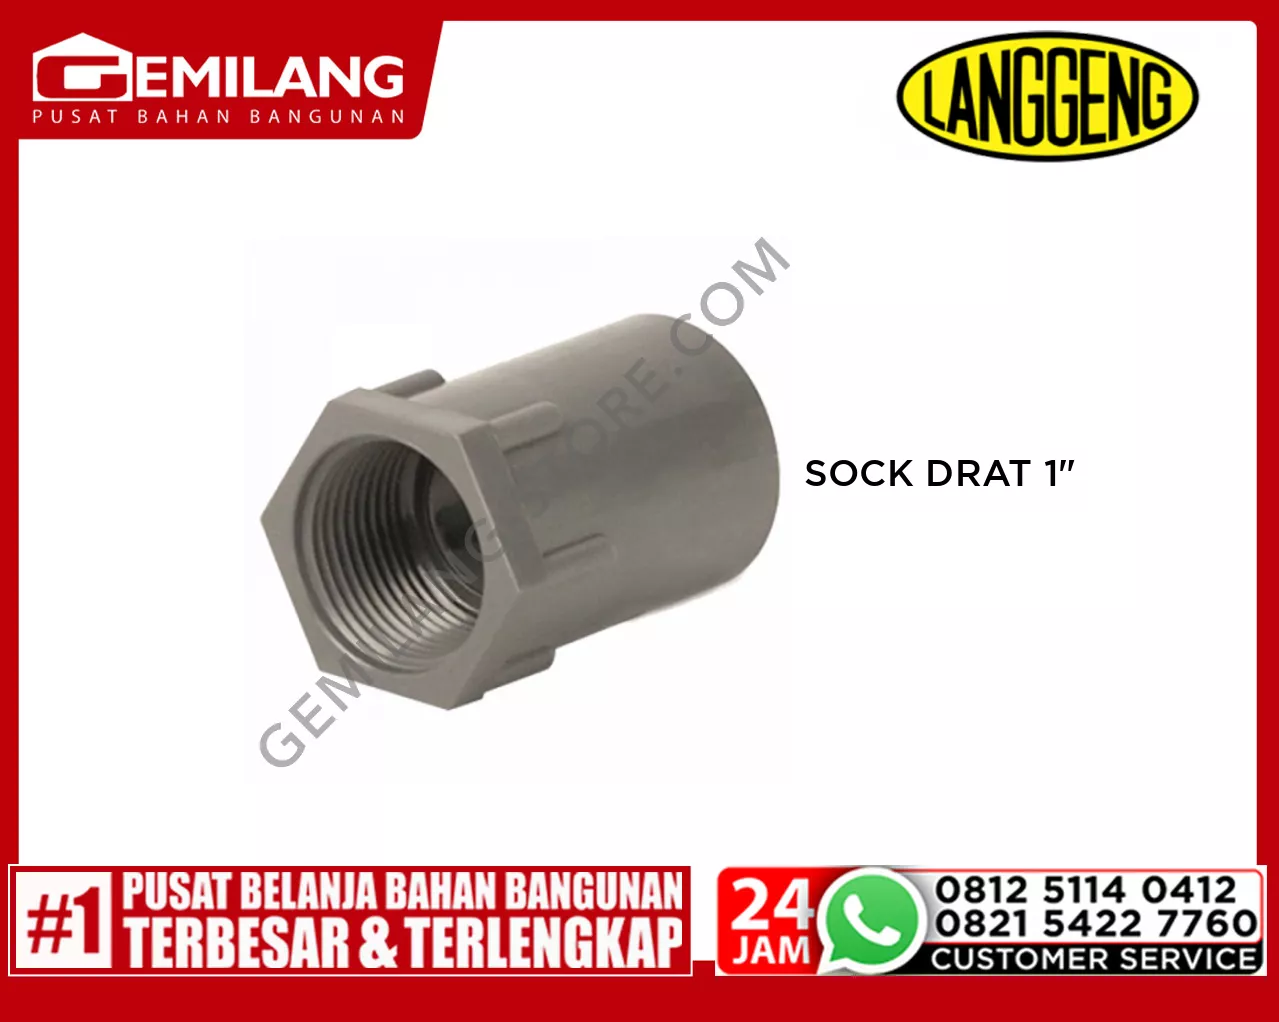 LANGGENG SOCK DRAT DALAM PVC 1inch